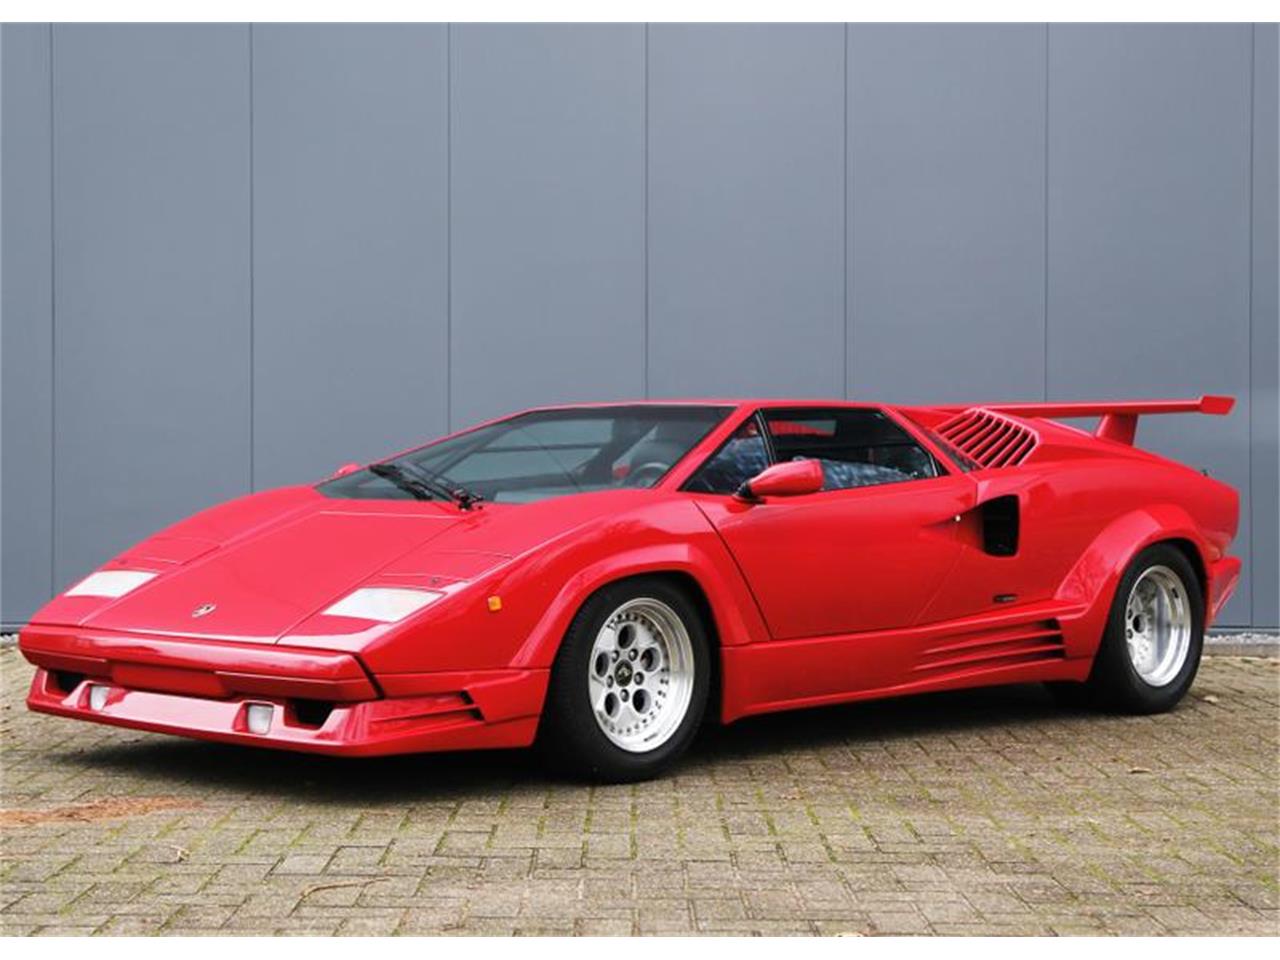 For Sale: 1989 Lamborghini Countach in Aiken, South Carolina for sale in Aiken, SC